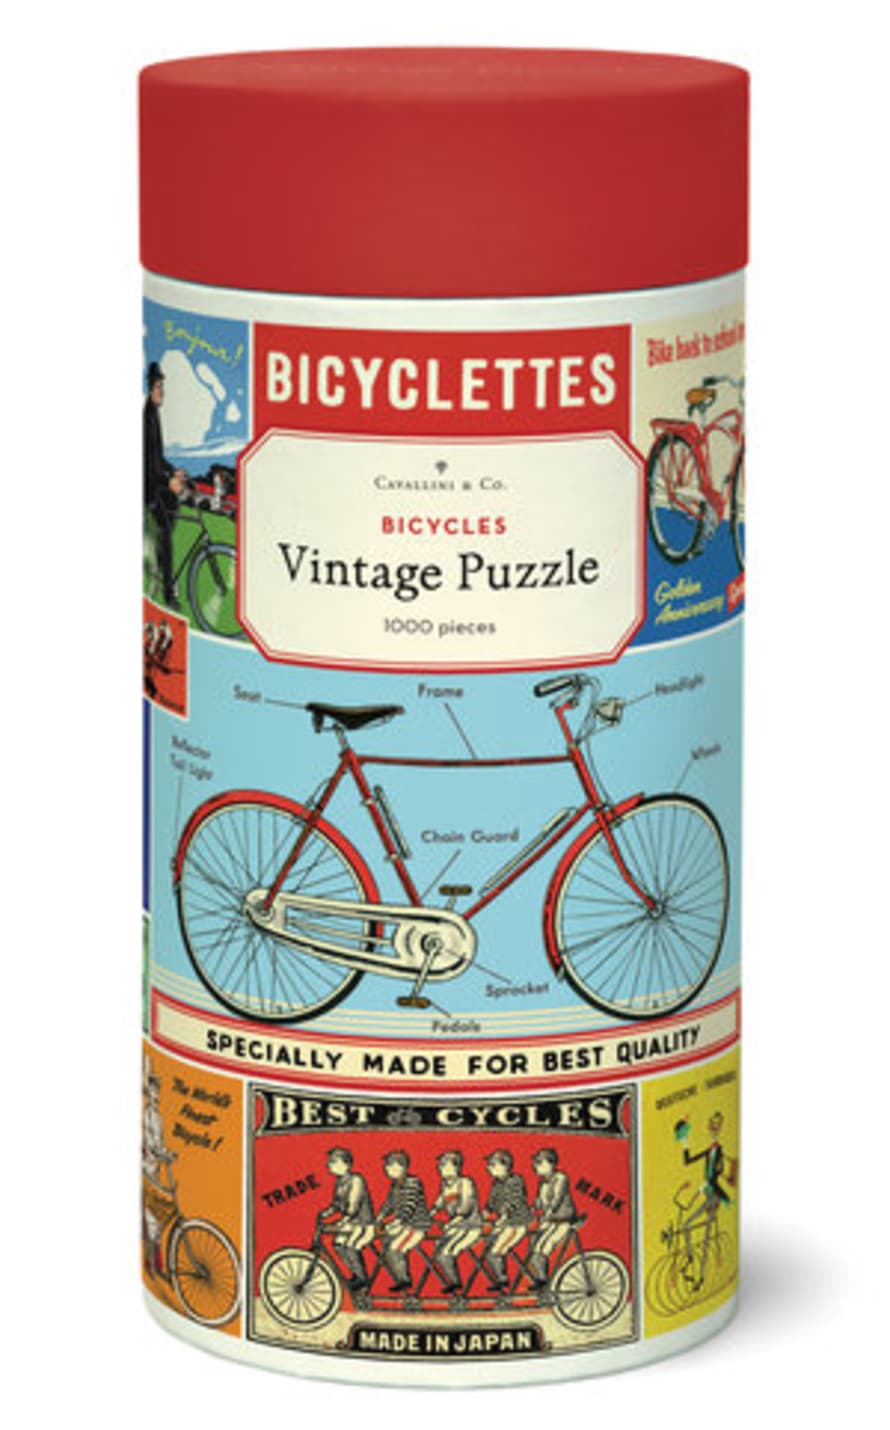 Cavallini & Co 1000 Piece Vintage Puzzle - Bicycles